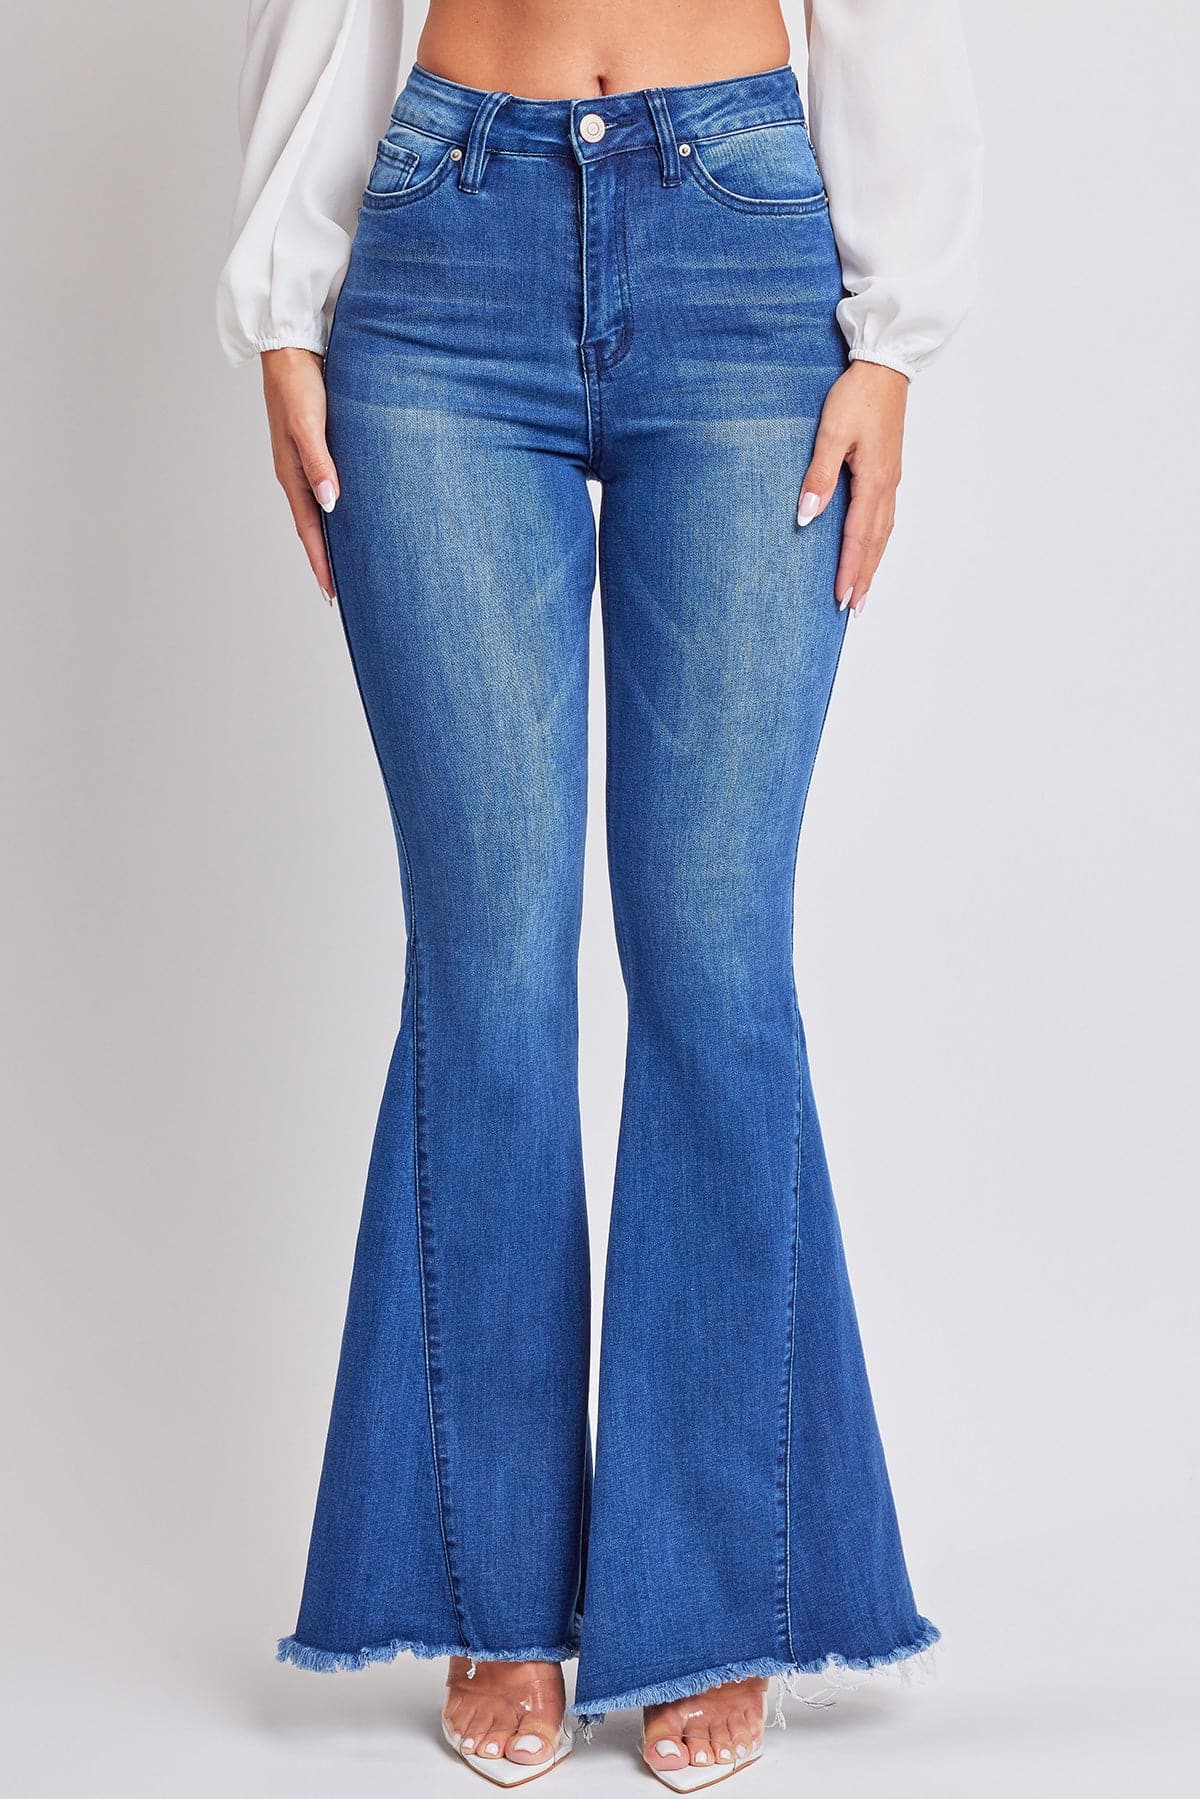 YMI Junior Women's Classic High Waisted Tall Long Inseam Flared Bell Bottom  Denim Jeans (Dark wash Denim,1) at  Women's Jeans store